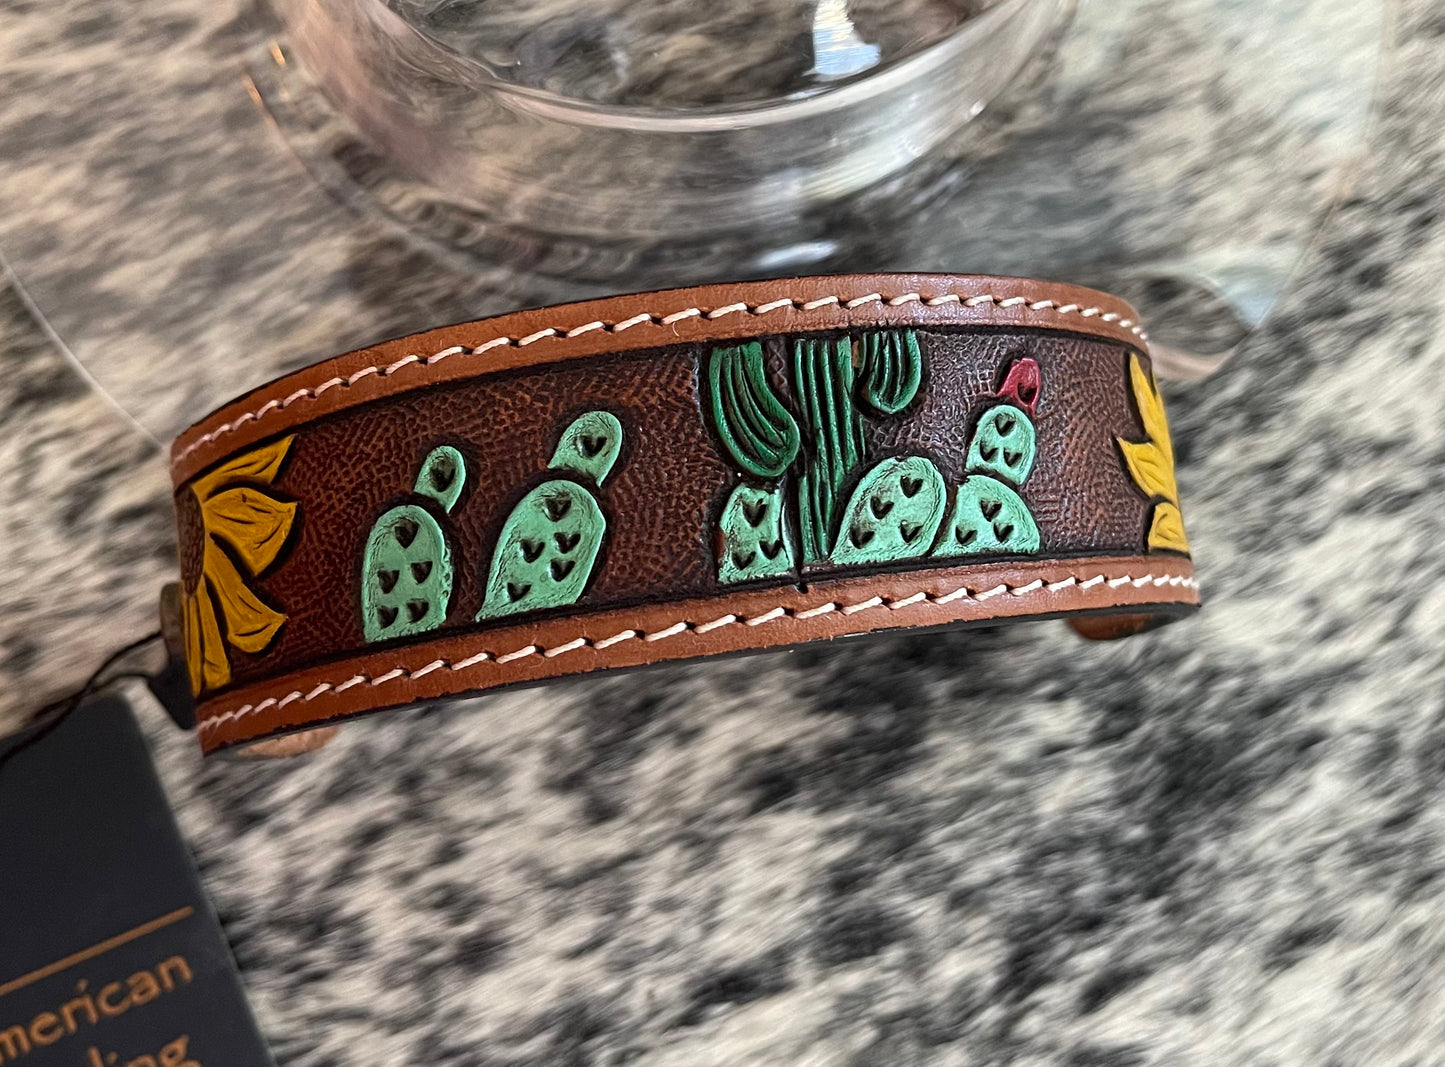 American Darling Cactus flower tooled leather bracelet